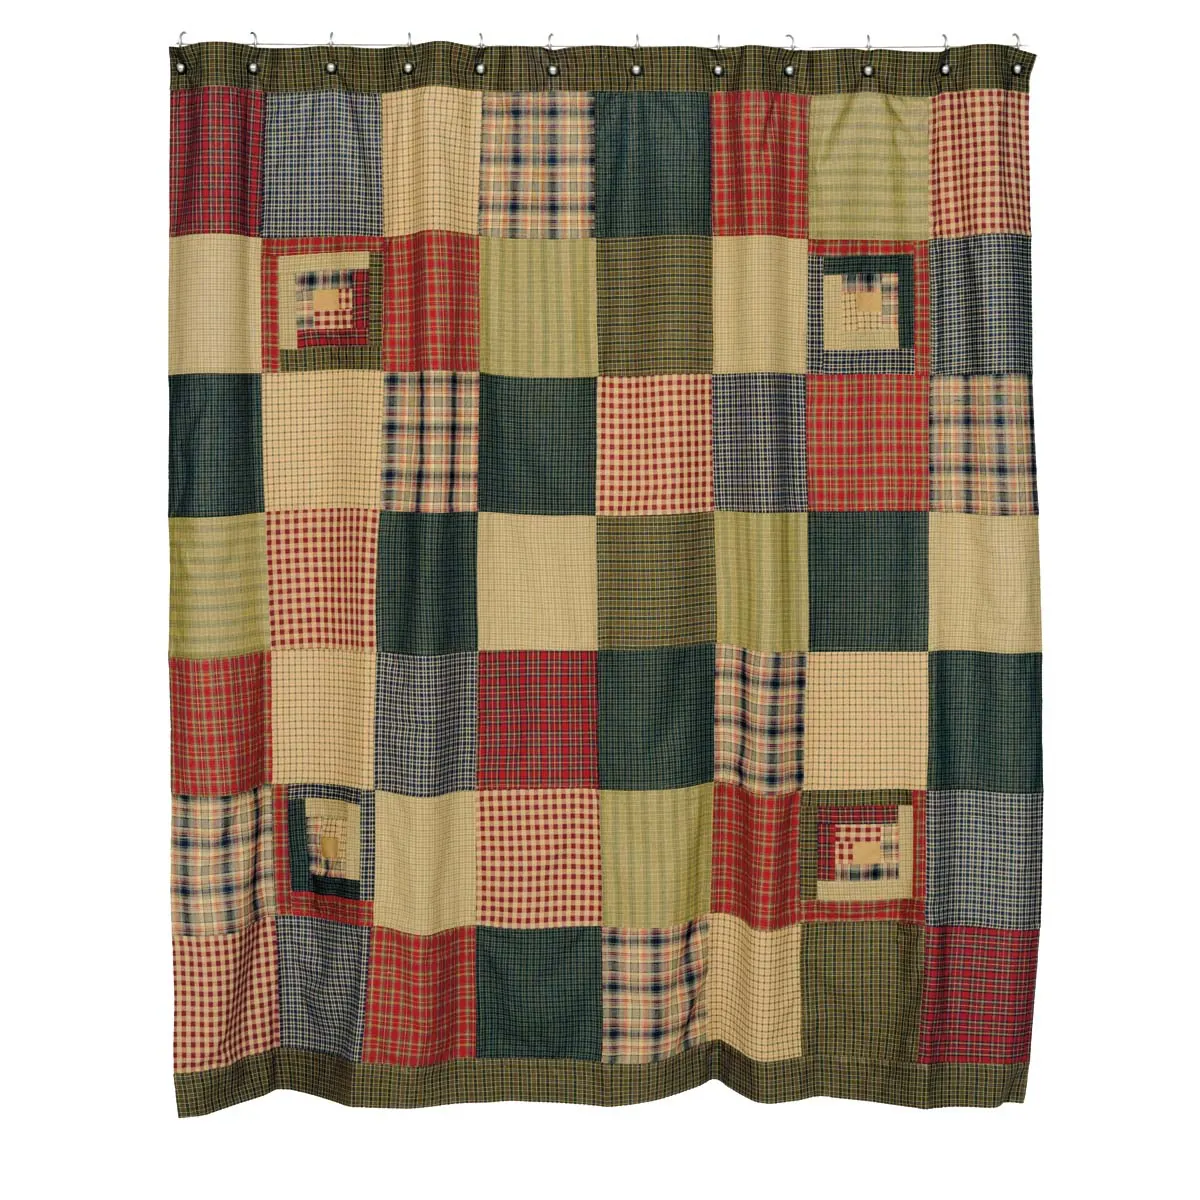 Tea Cabin Shower Curtain Patchwork 72x72